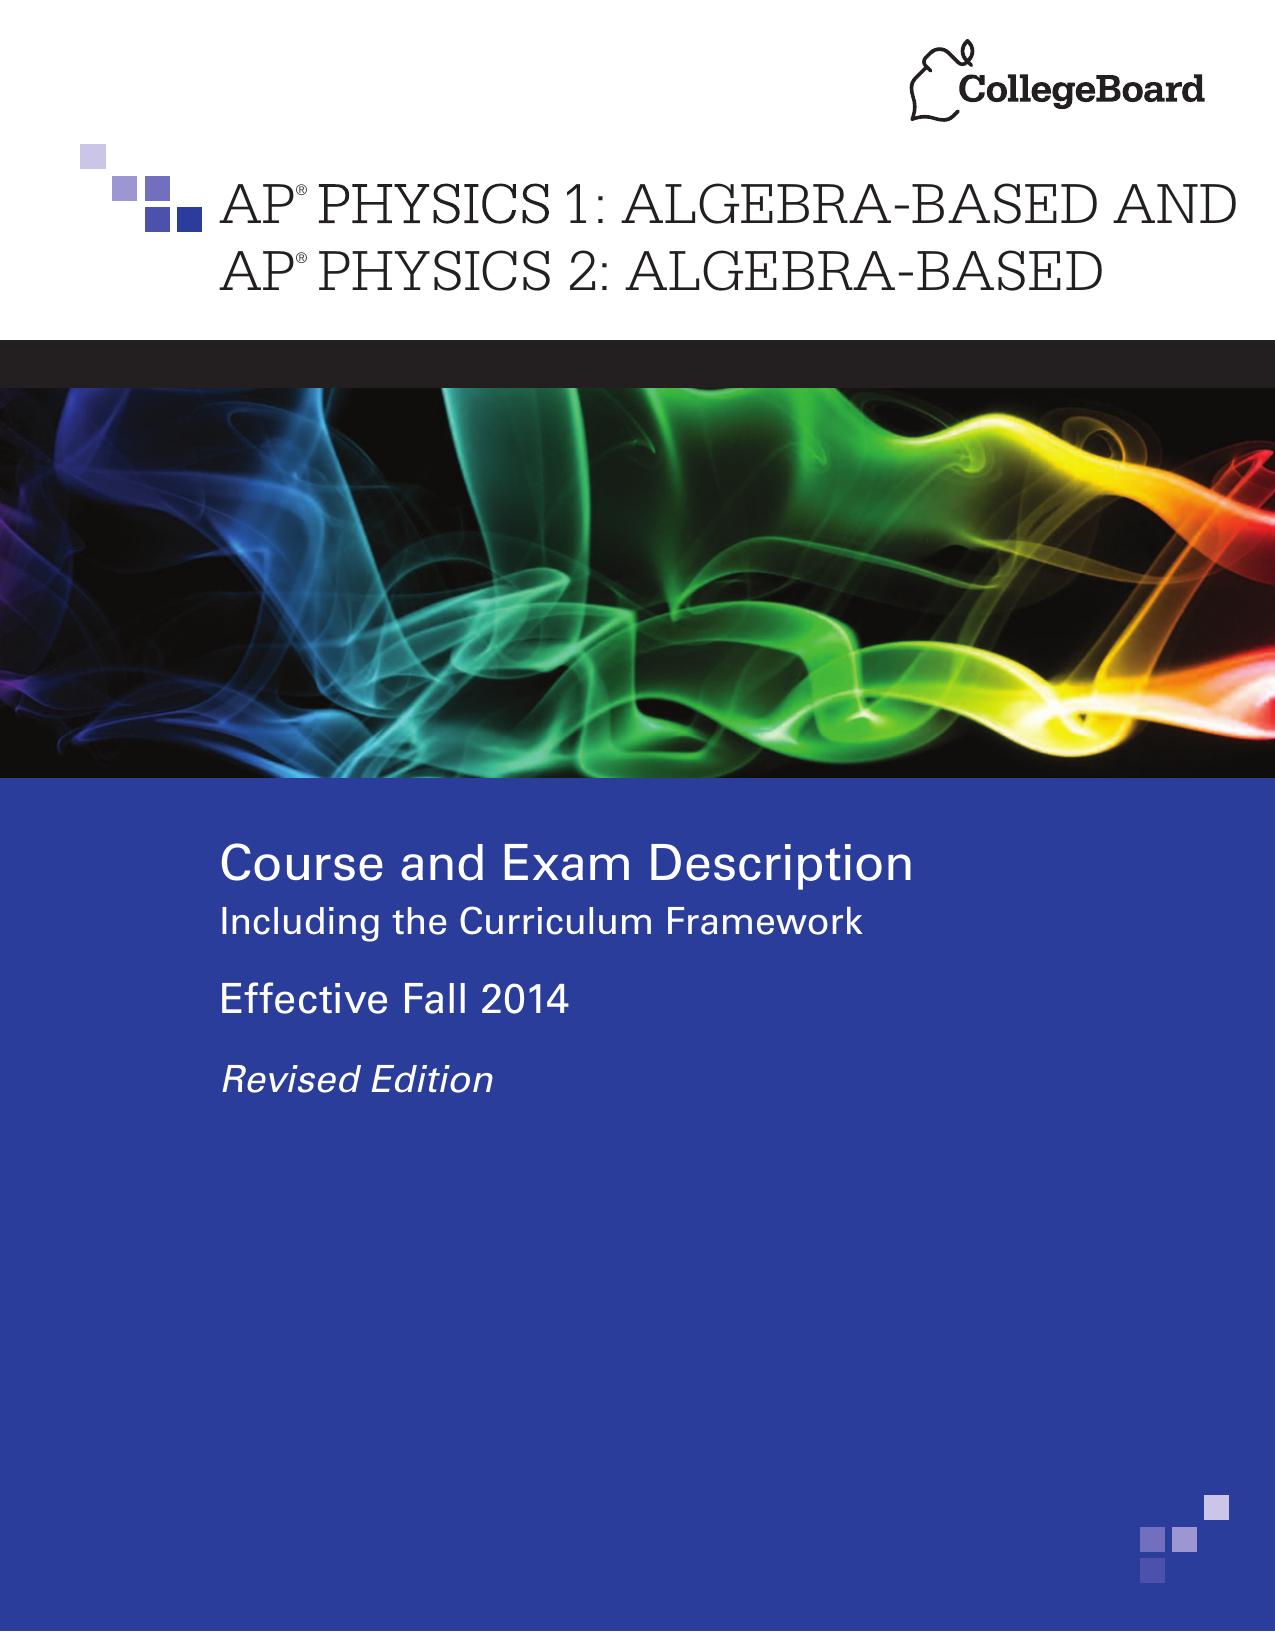 AP Physics 1 Algebra-Based and AP Physics 2 Algebra-Based Coursription, Including the Curriculum Framework - The College Board.jpg